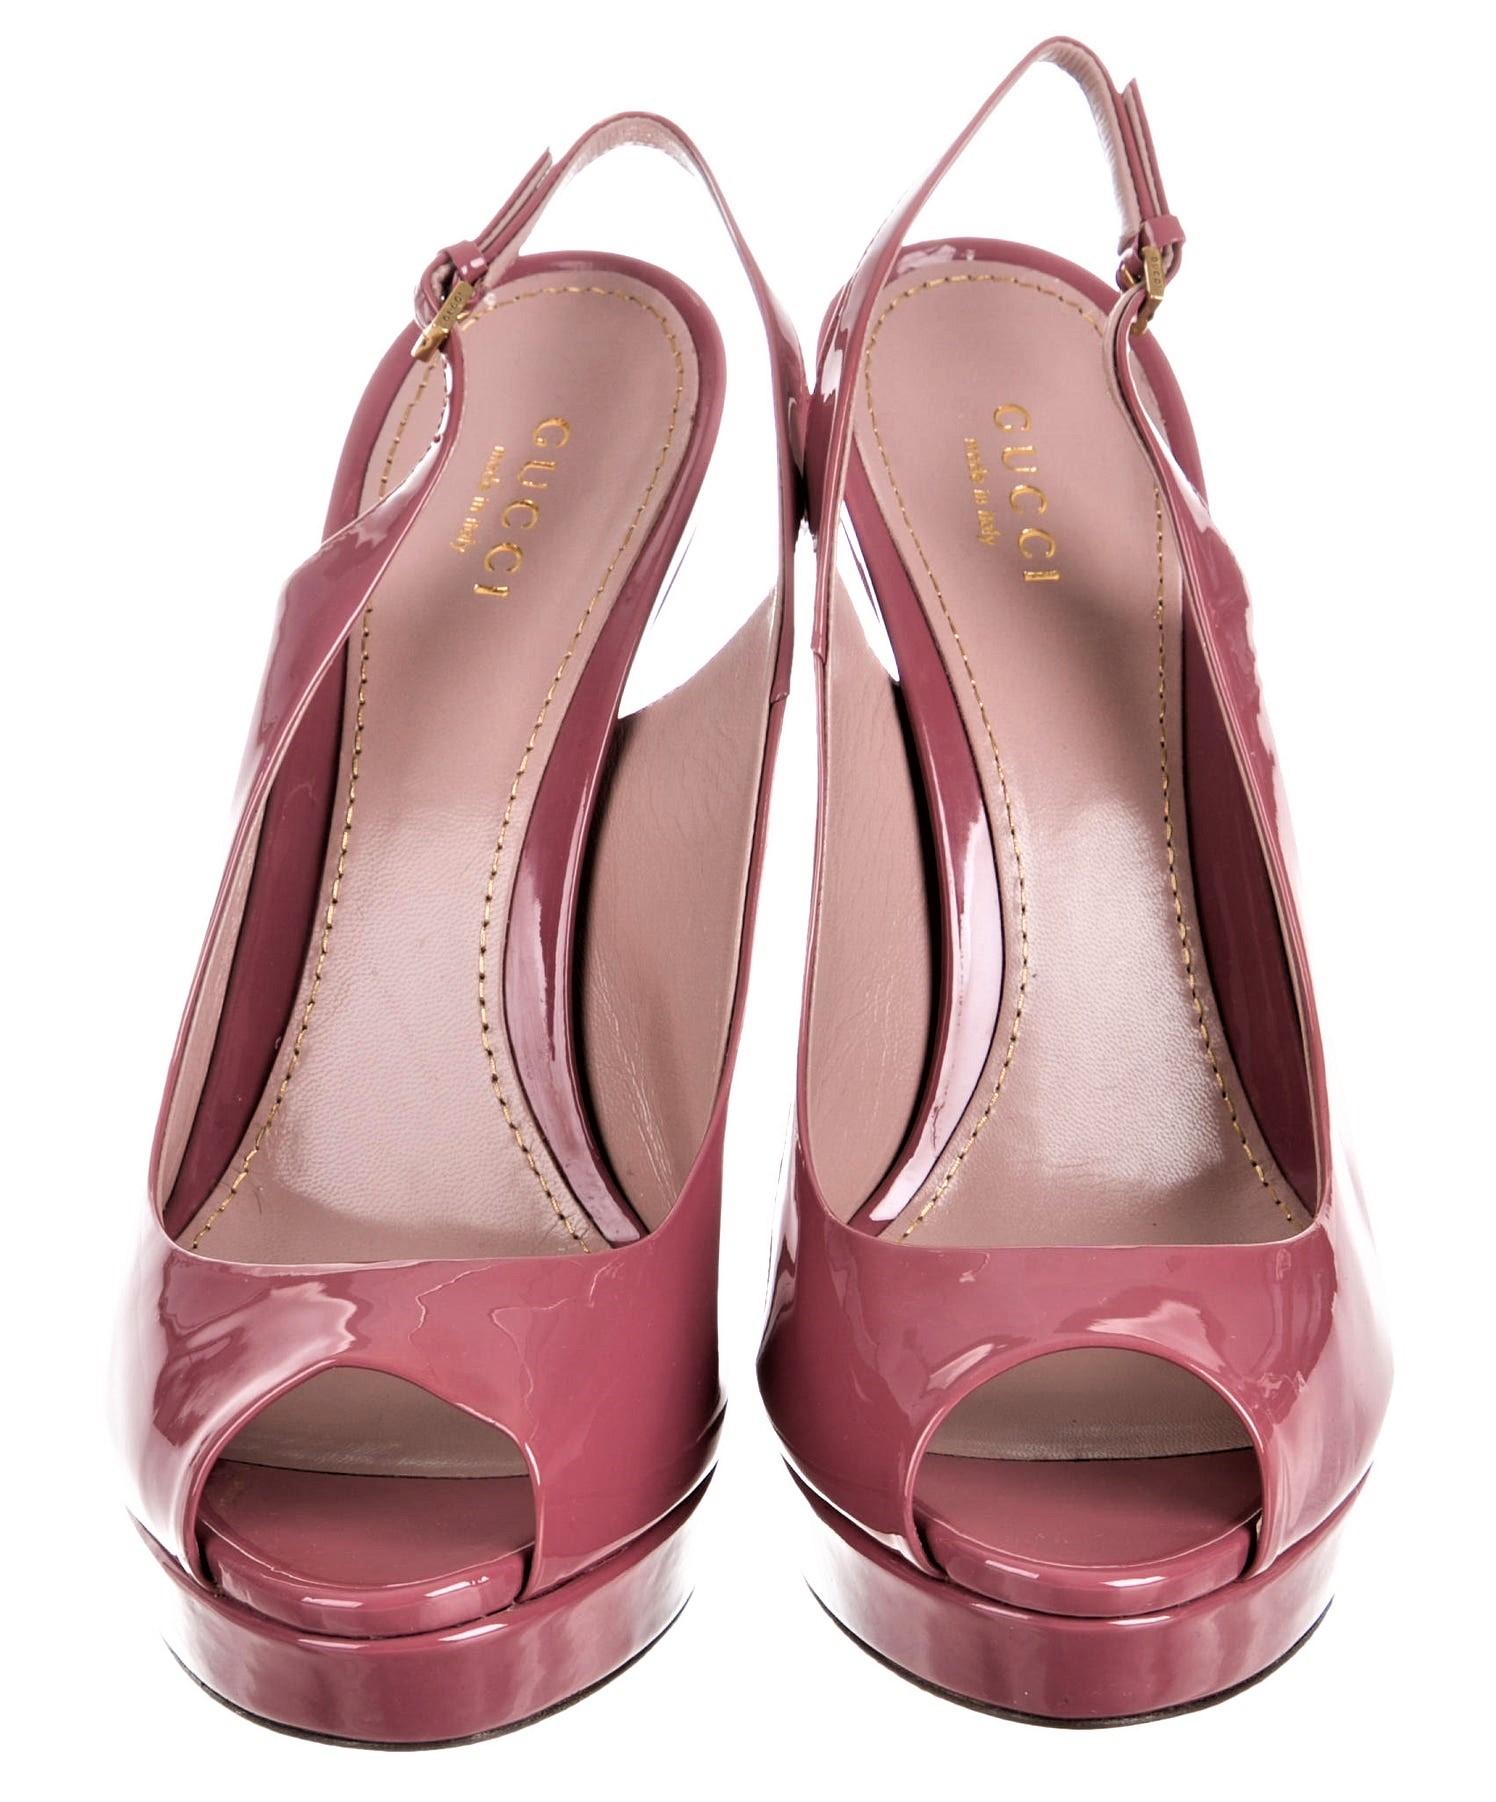 blush patent leather heels